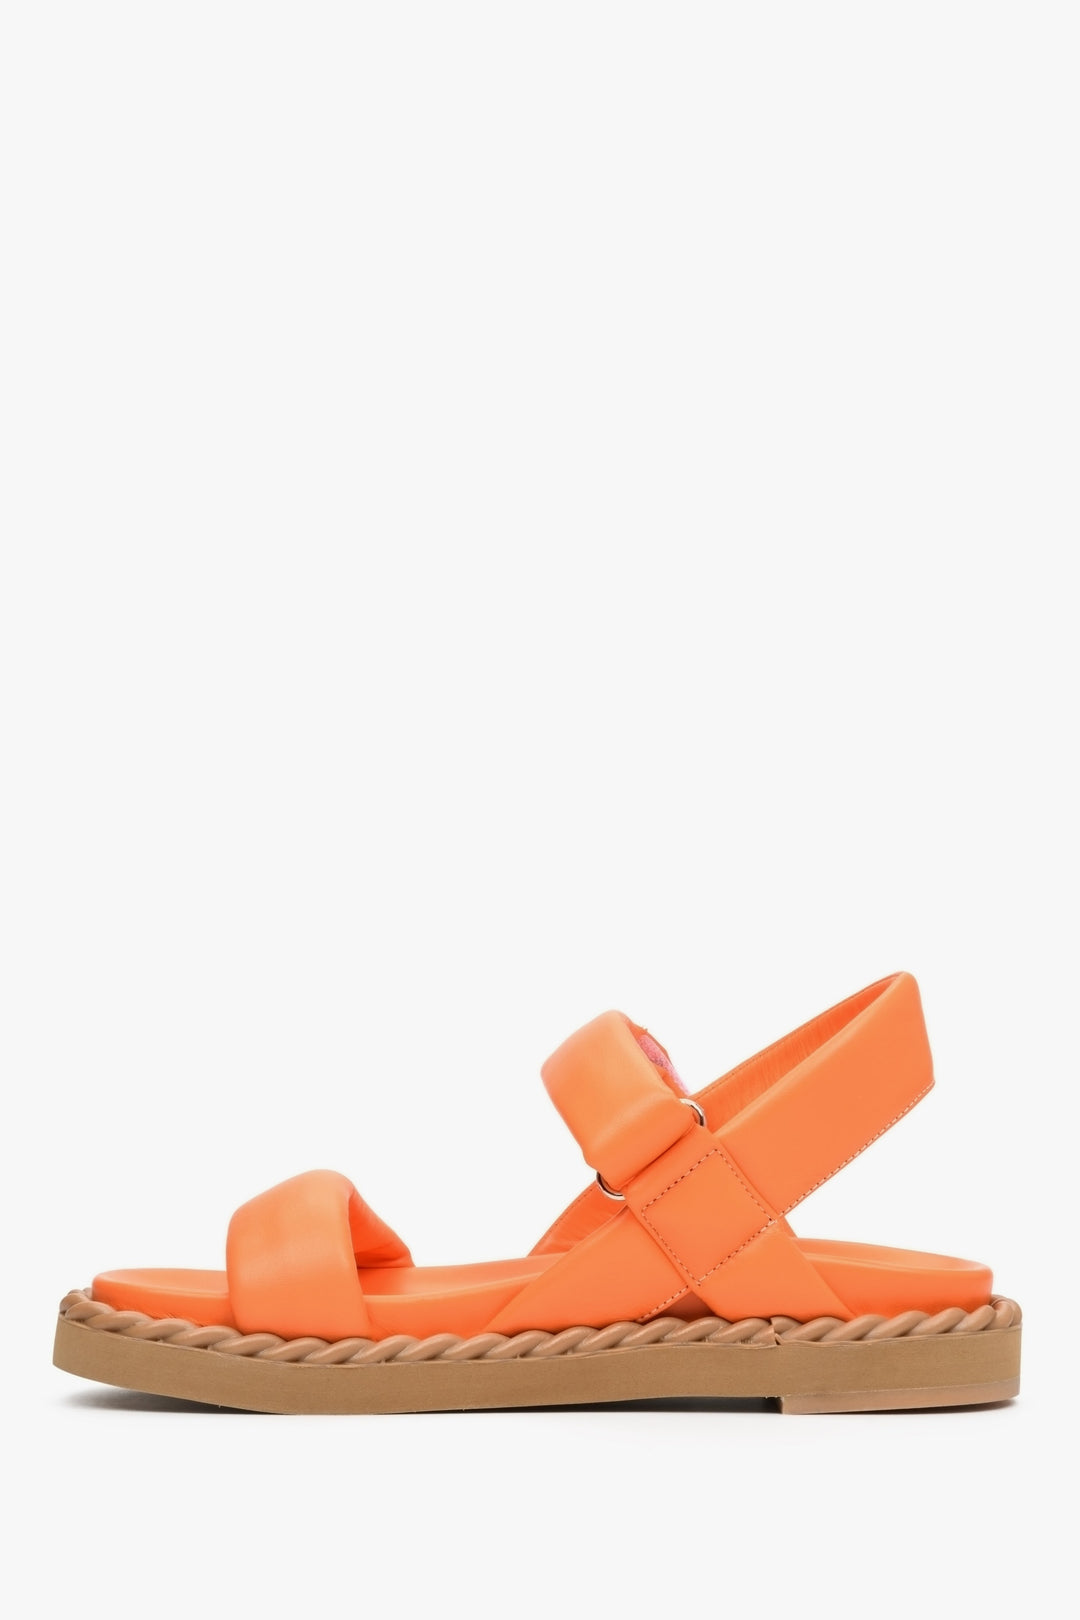 Estro women's orange leather sandals for summer - shoe side.